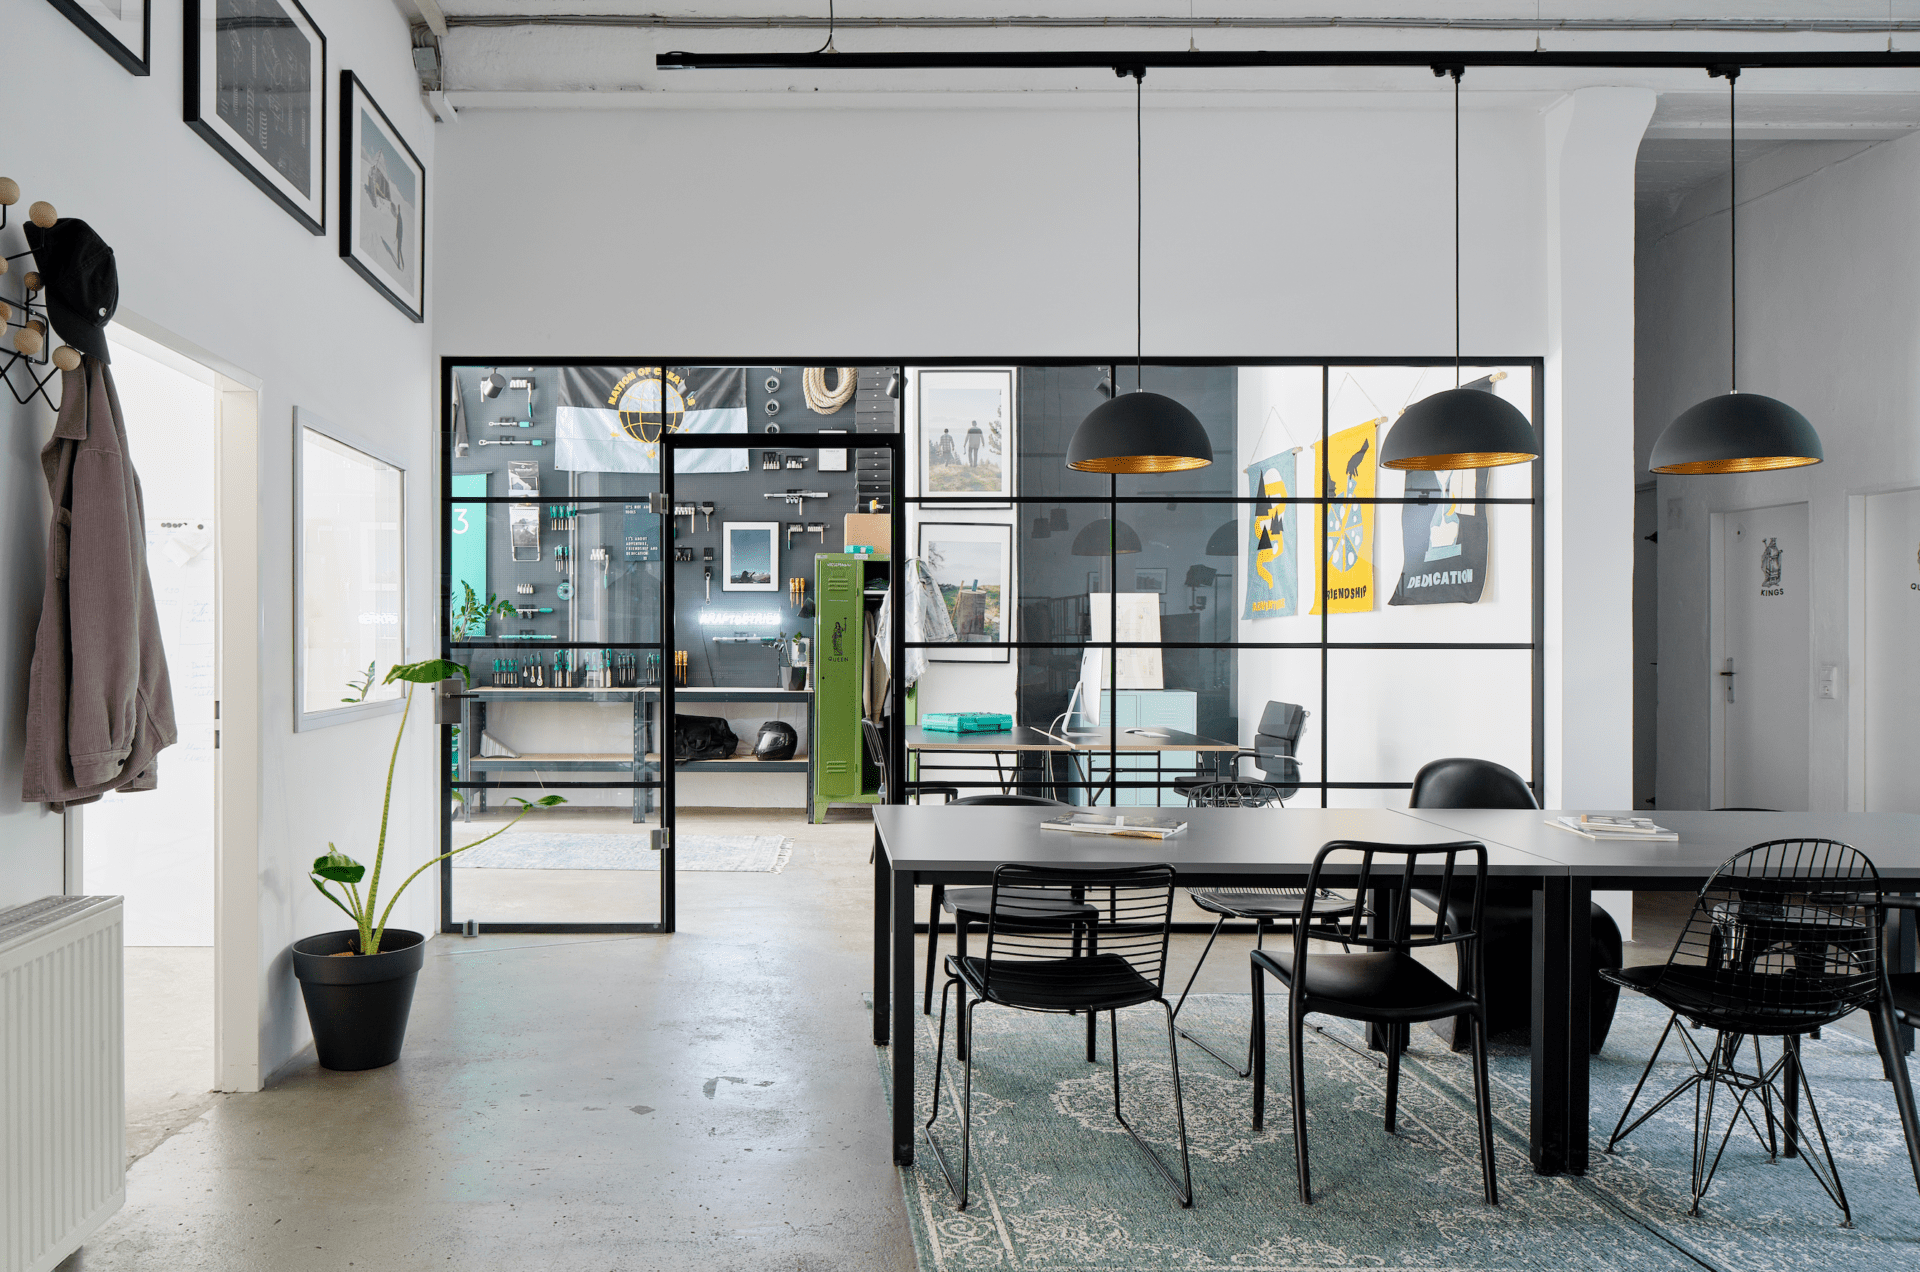 The Fabelhaft Group transforms Frankfurt office to feel like home